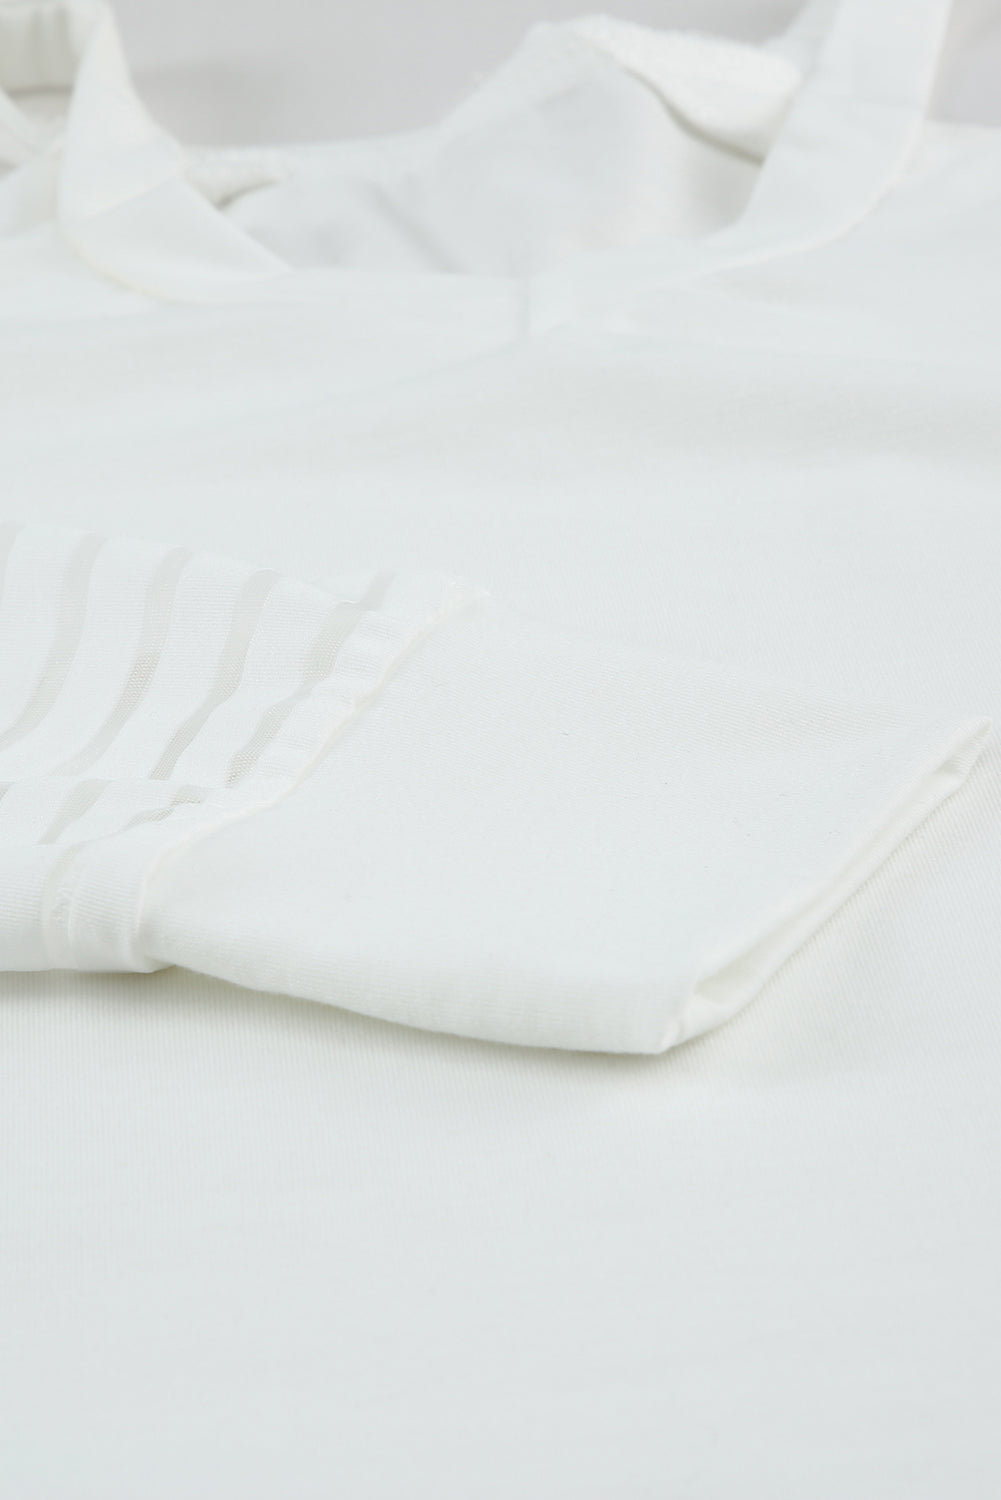 T-shirt a maniche lunghe con spalle scoperte ritagliate a righe in rete